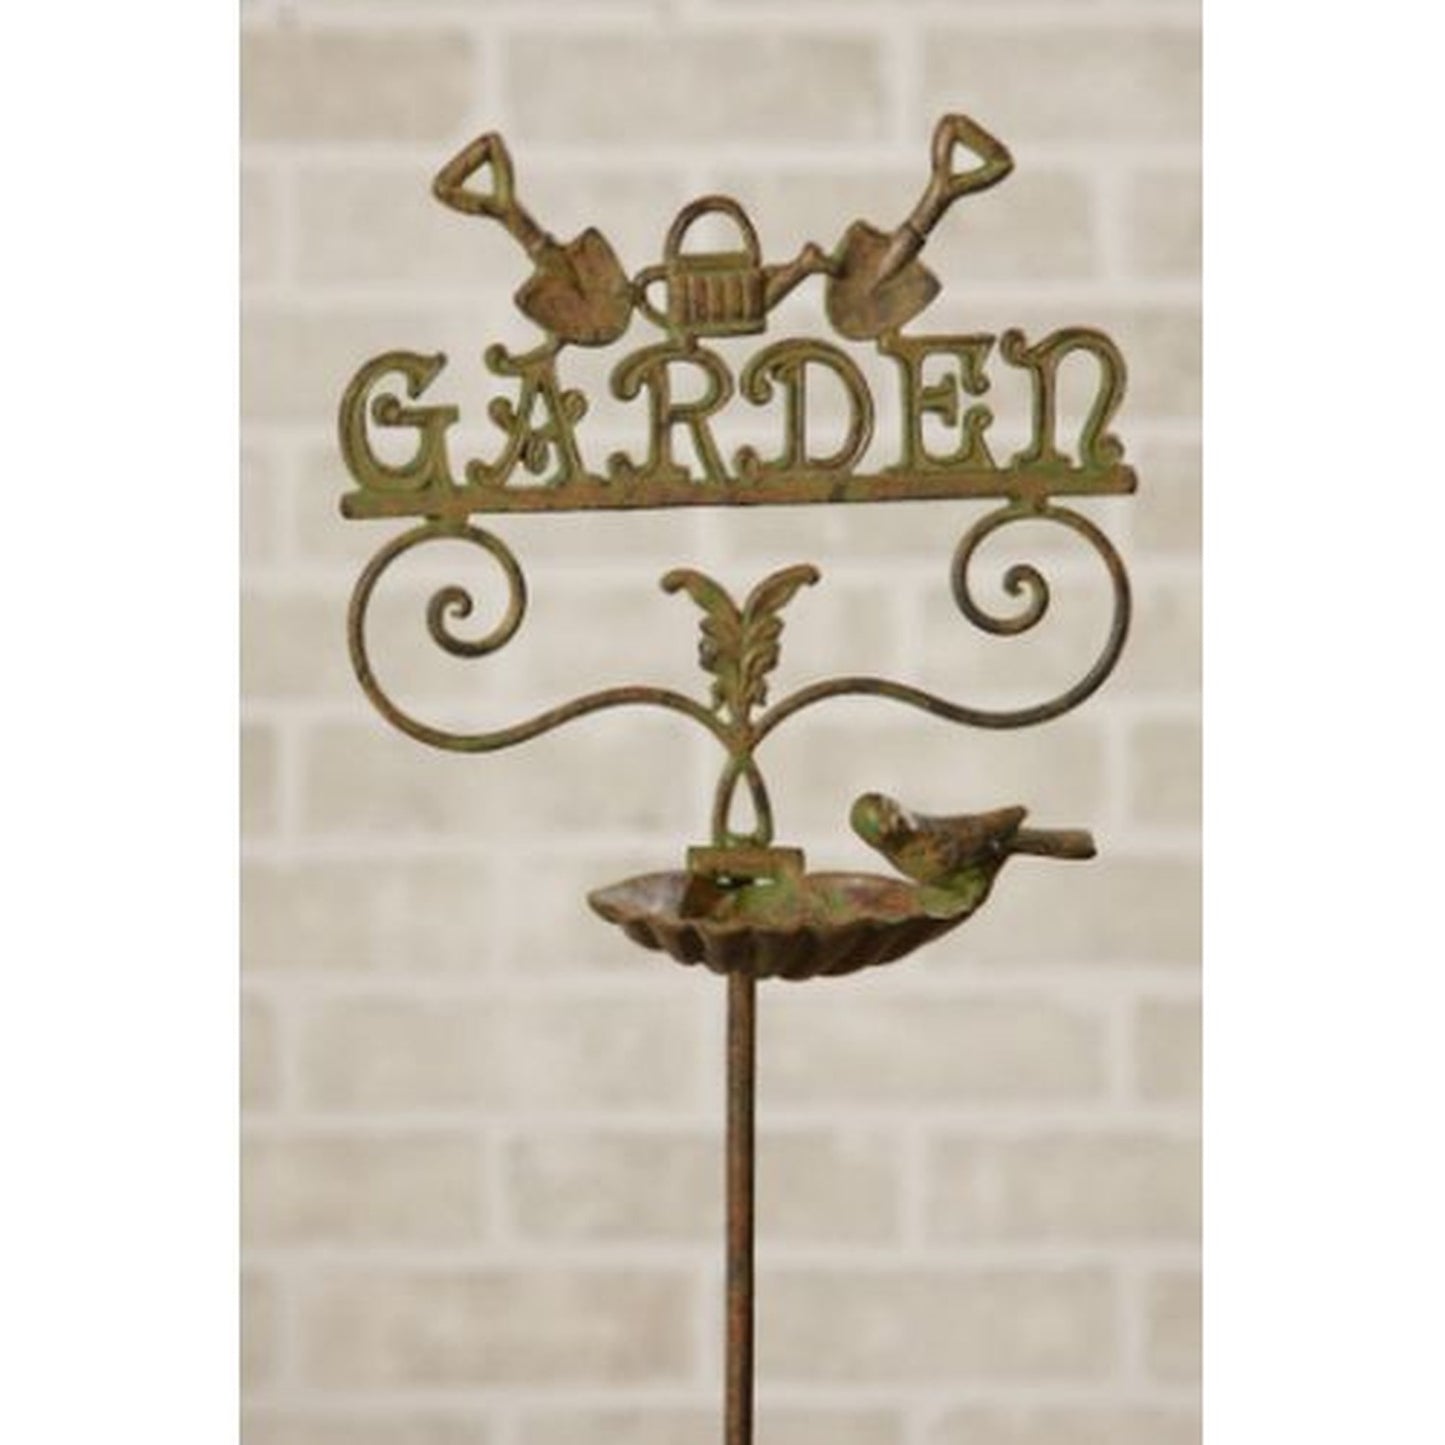 Your Heart's Delight Garden Stake - Garden with Birdfeeder & Tools Decor, Iron